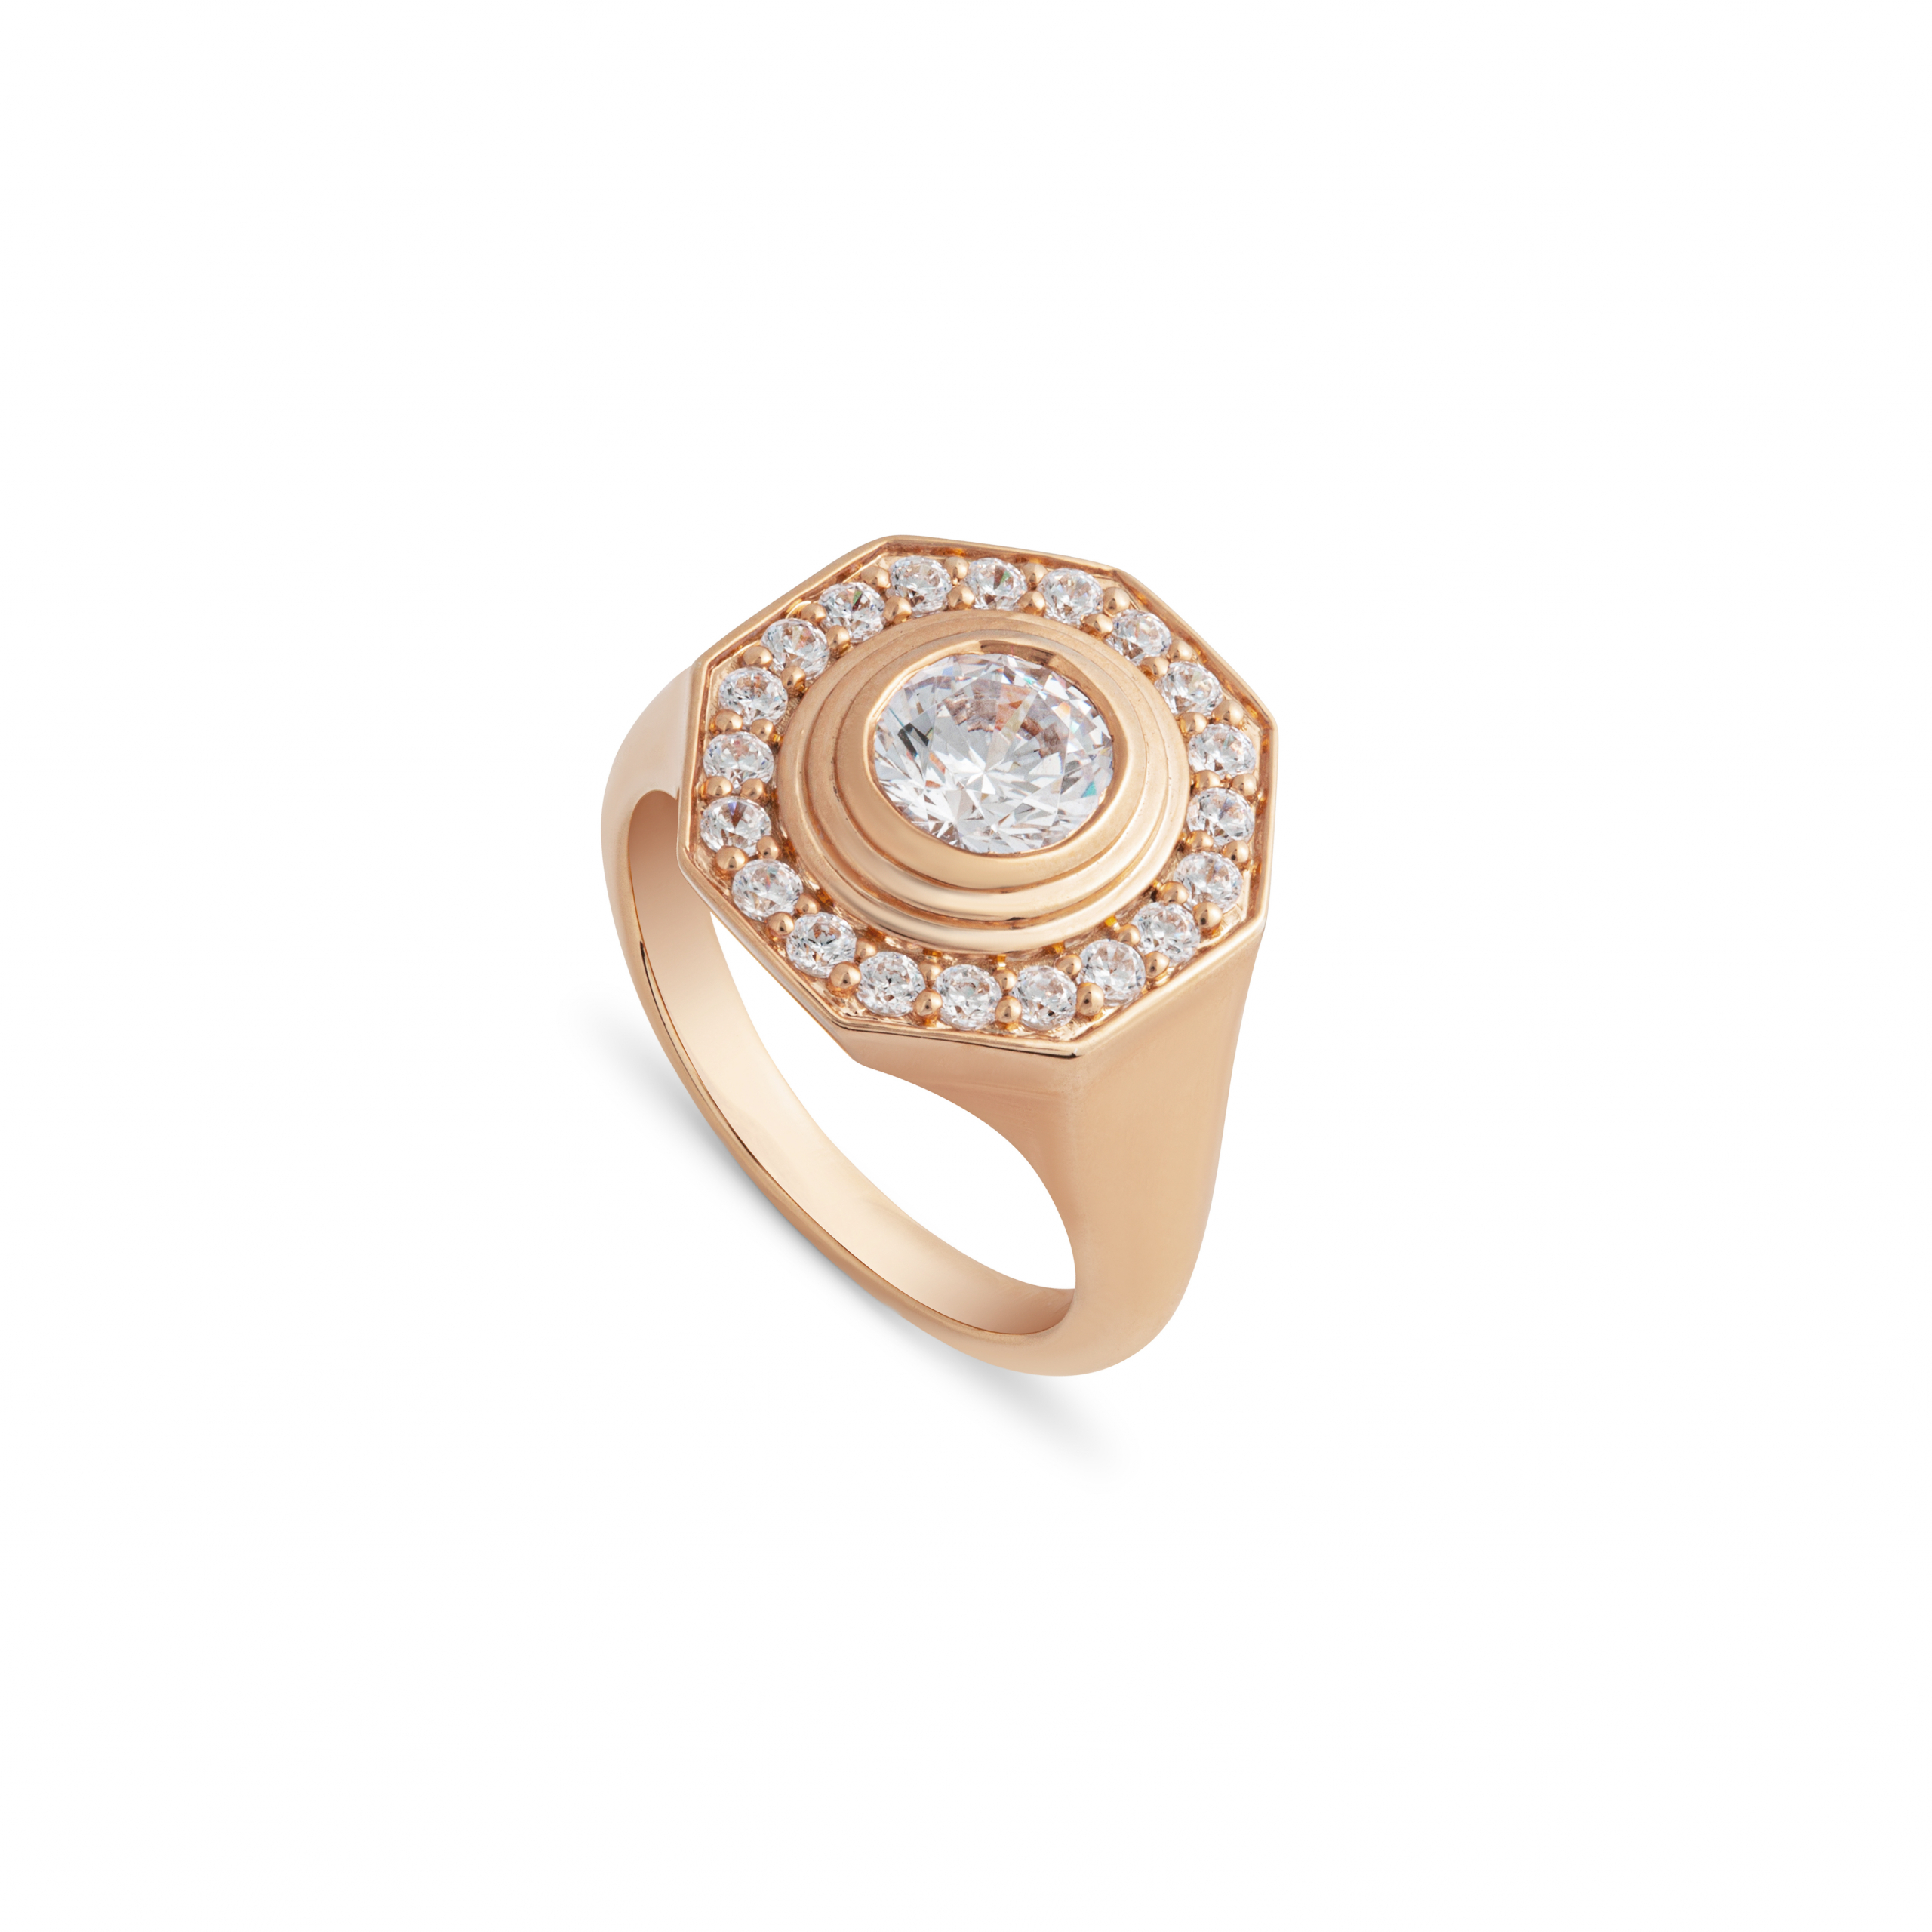 Binky Felstead's amazing 'six carat' engagement ring has big price